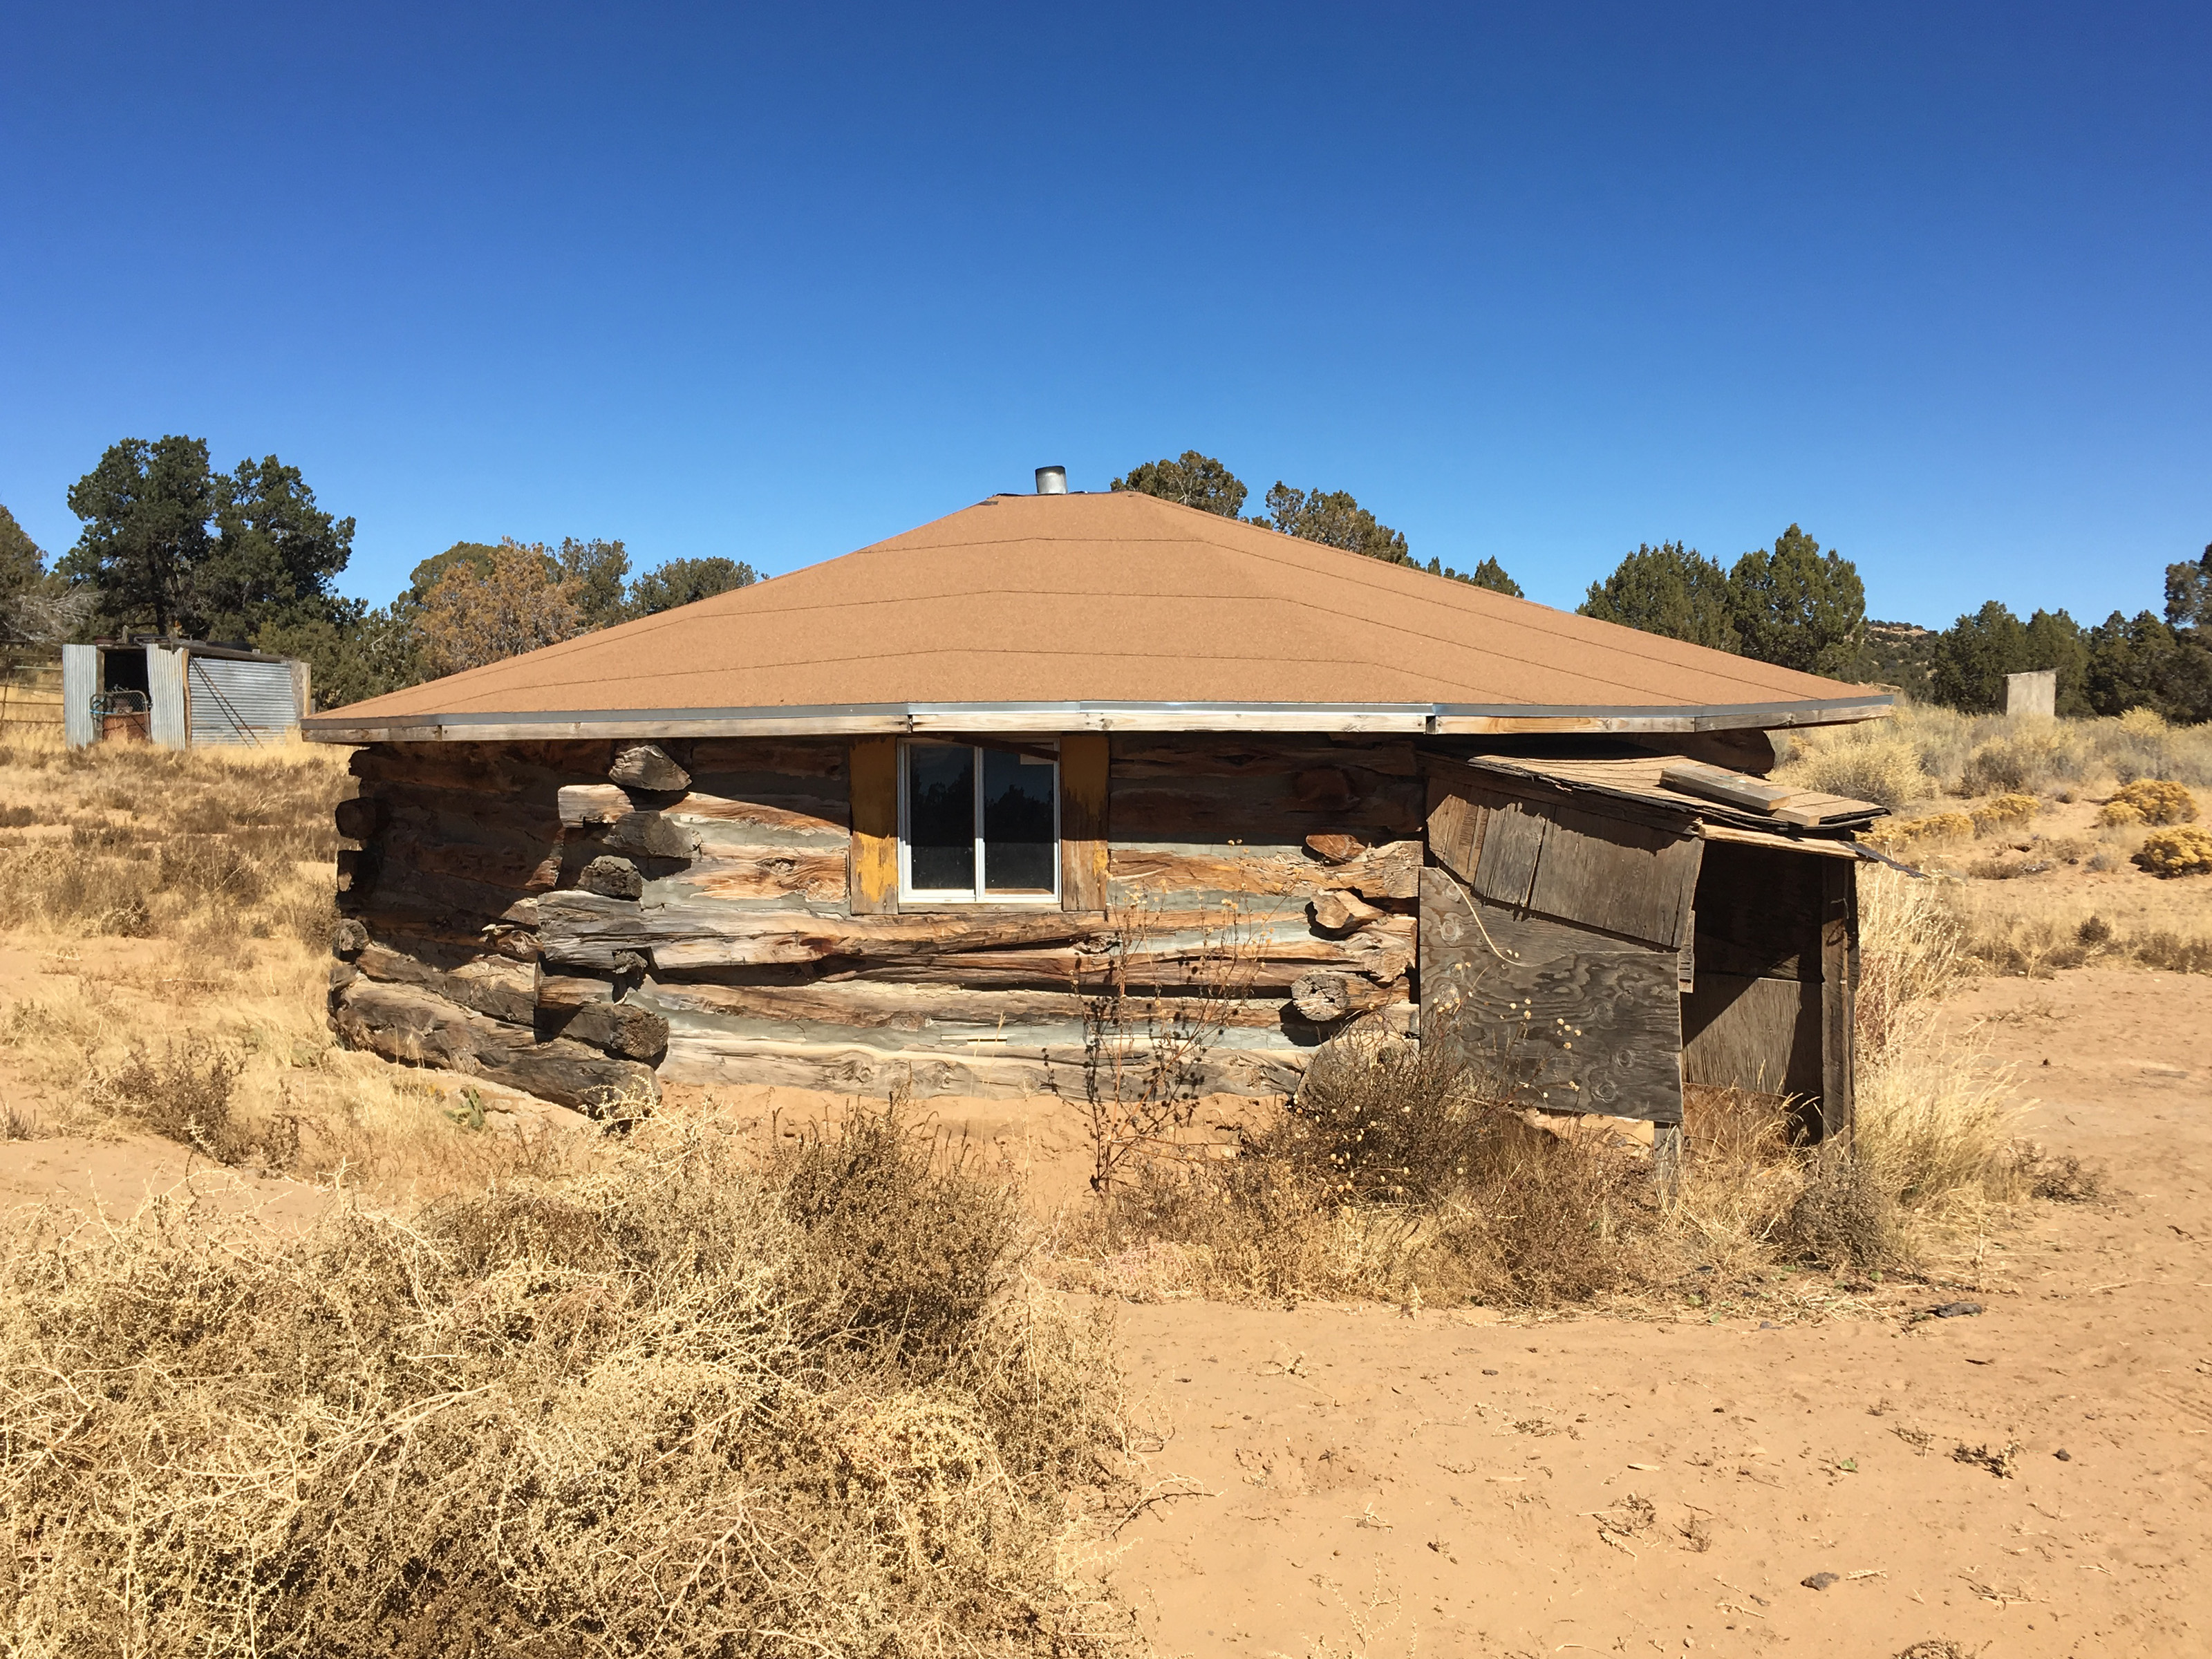 A cozy log cabin nestled in the barren desert landscape, inspired by Navajo design.